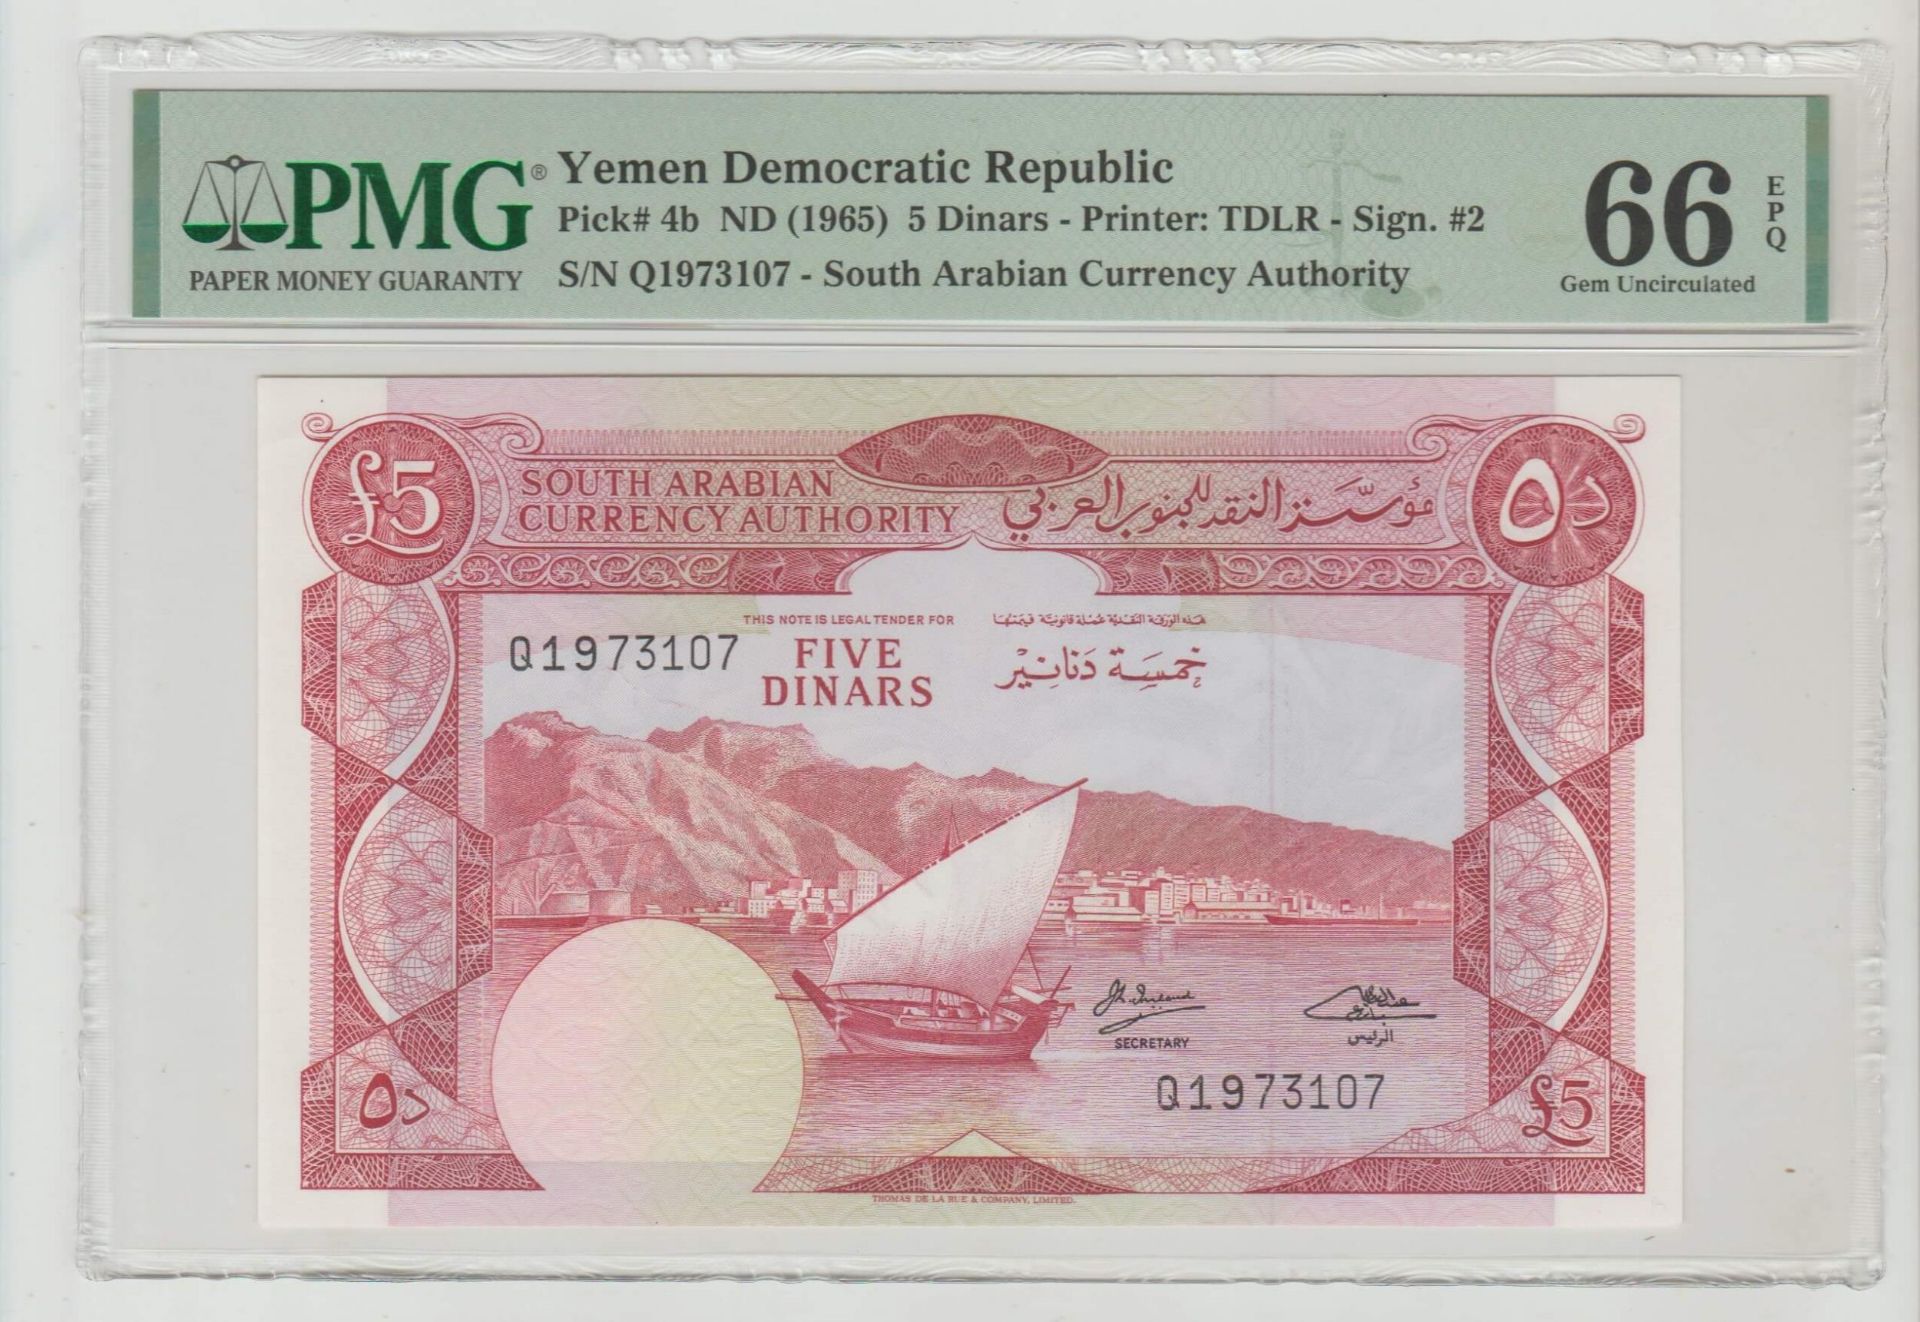 Yemen Democratic Republic, 5 Dinars, 1965 year